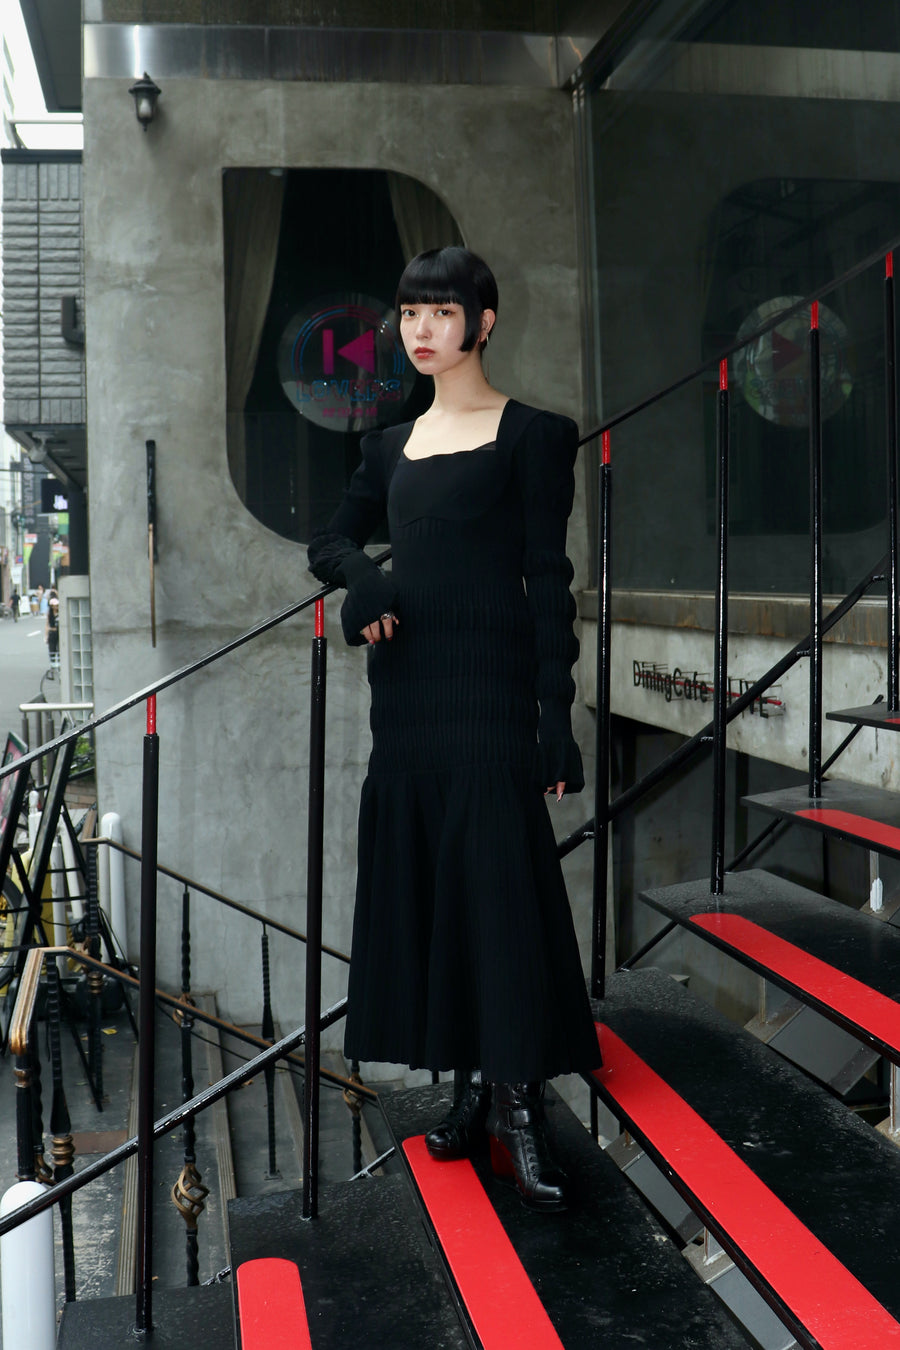 FETICO's Stripe Knit Midi Dress (Dress) Mail Order | Palette Art ...